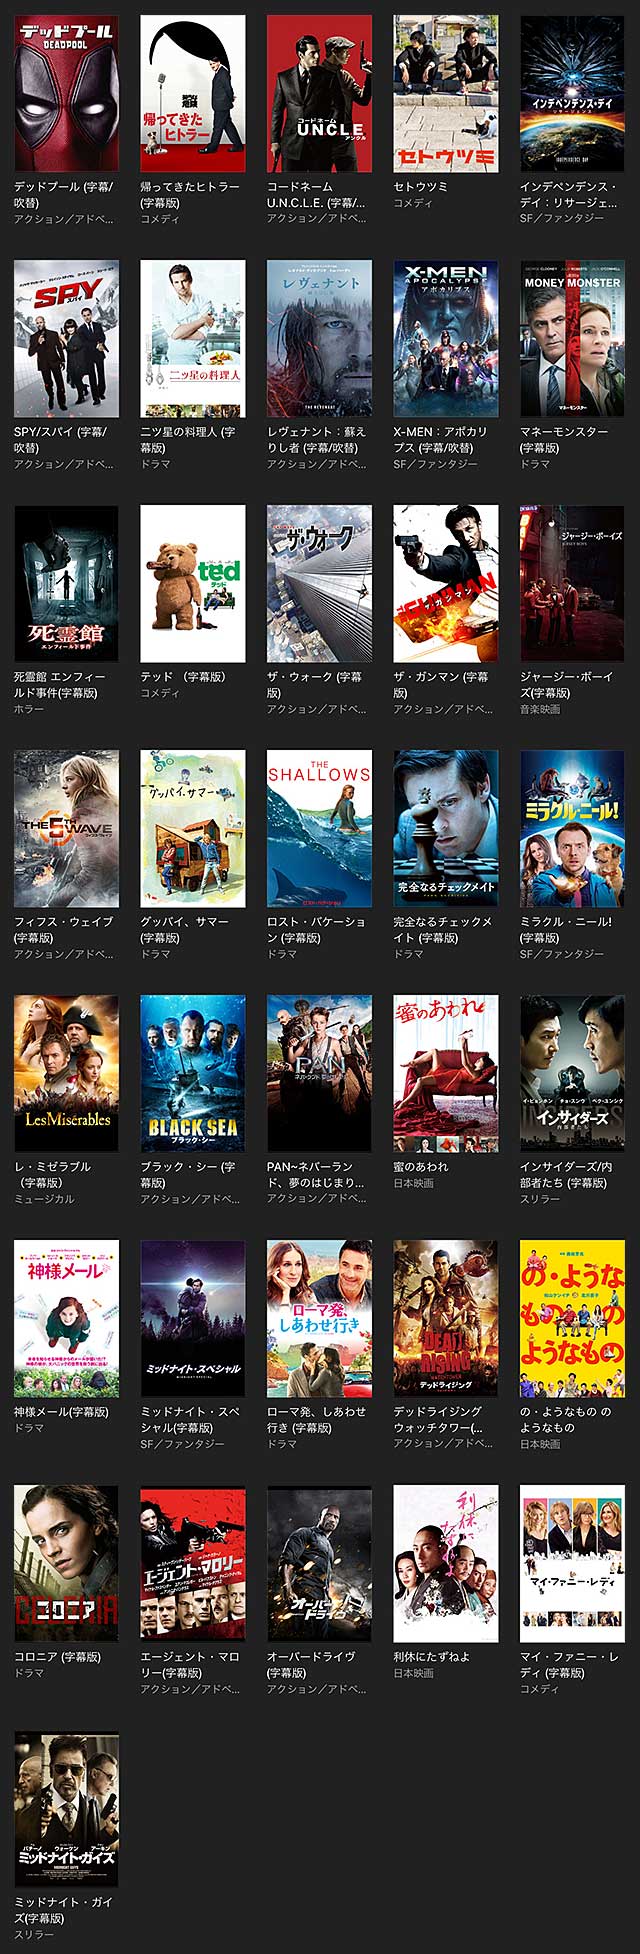 iTunes Store 新年映画初め レンタル特別価格